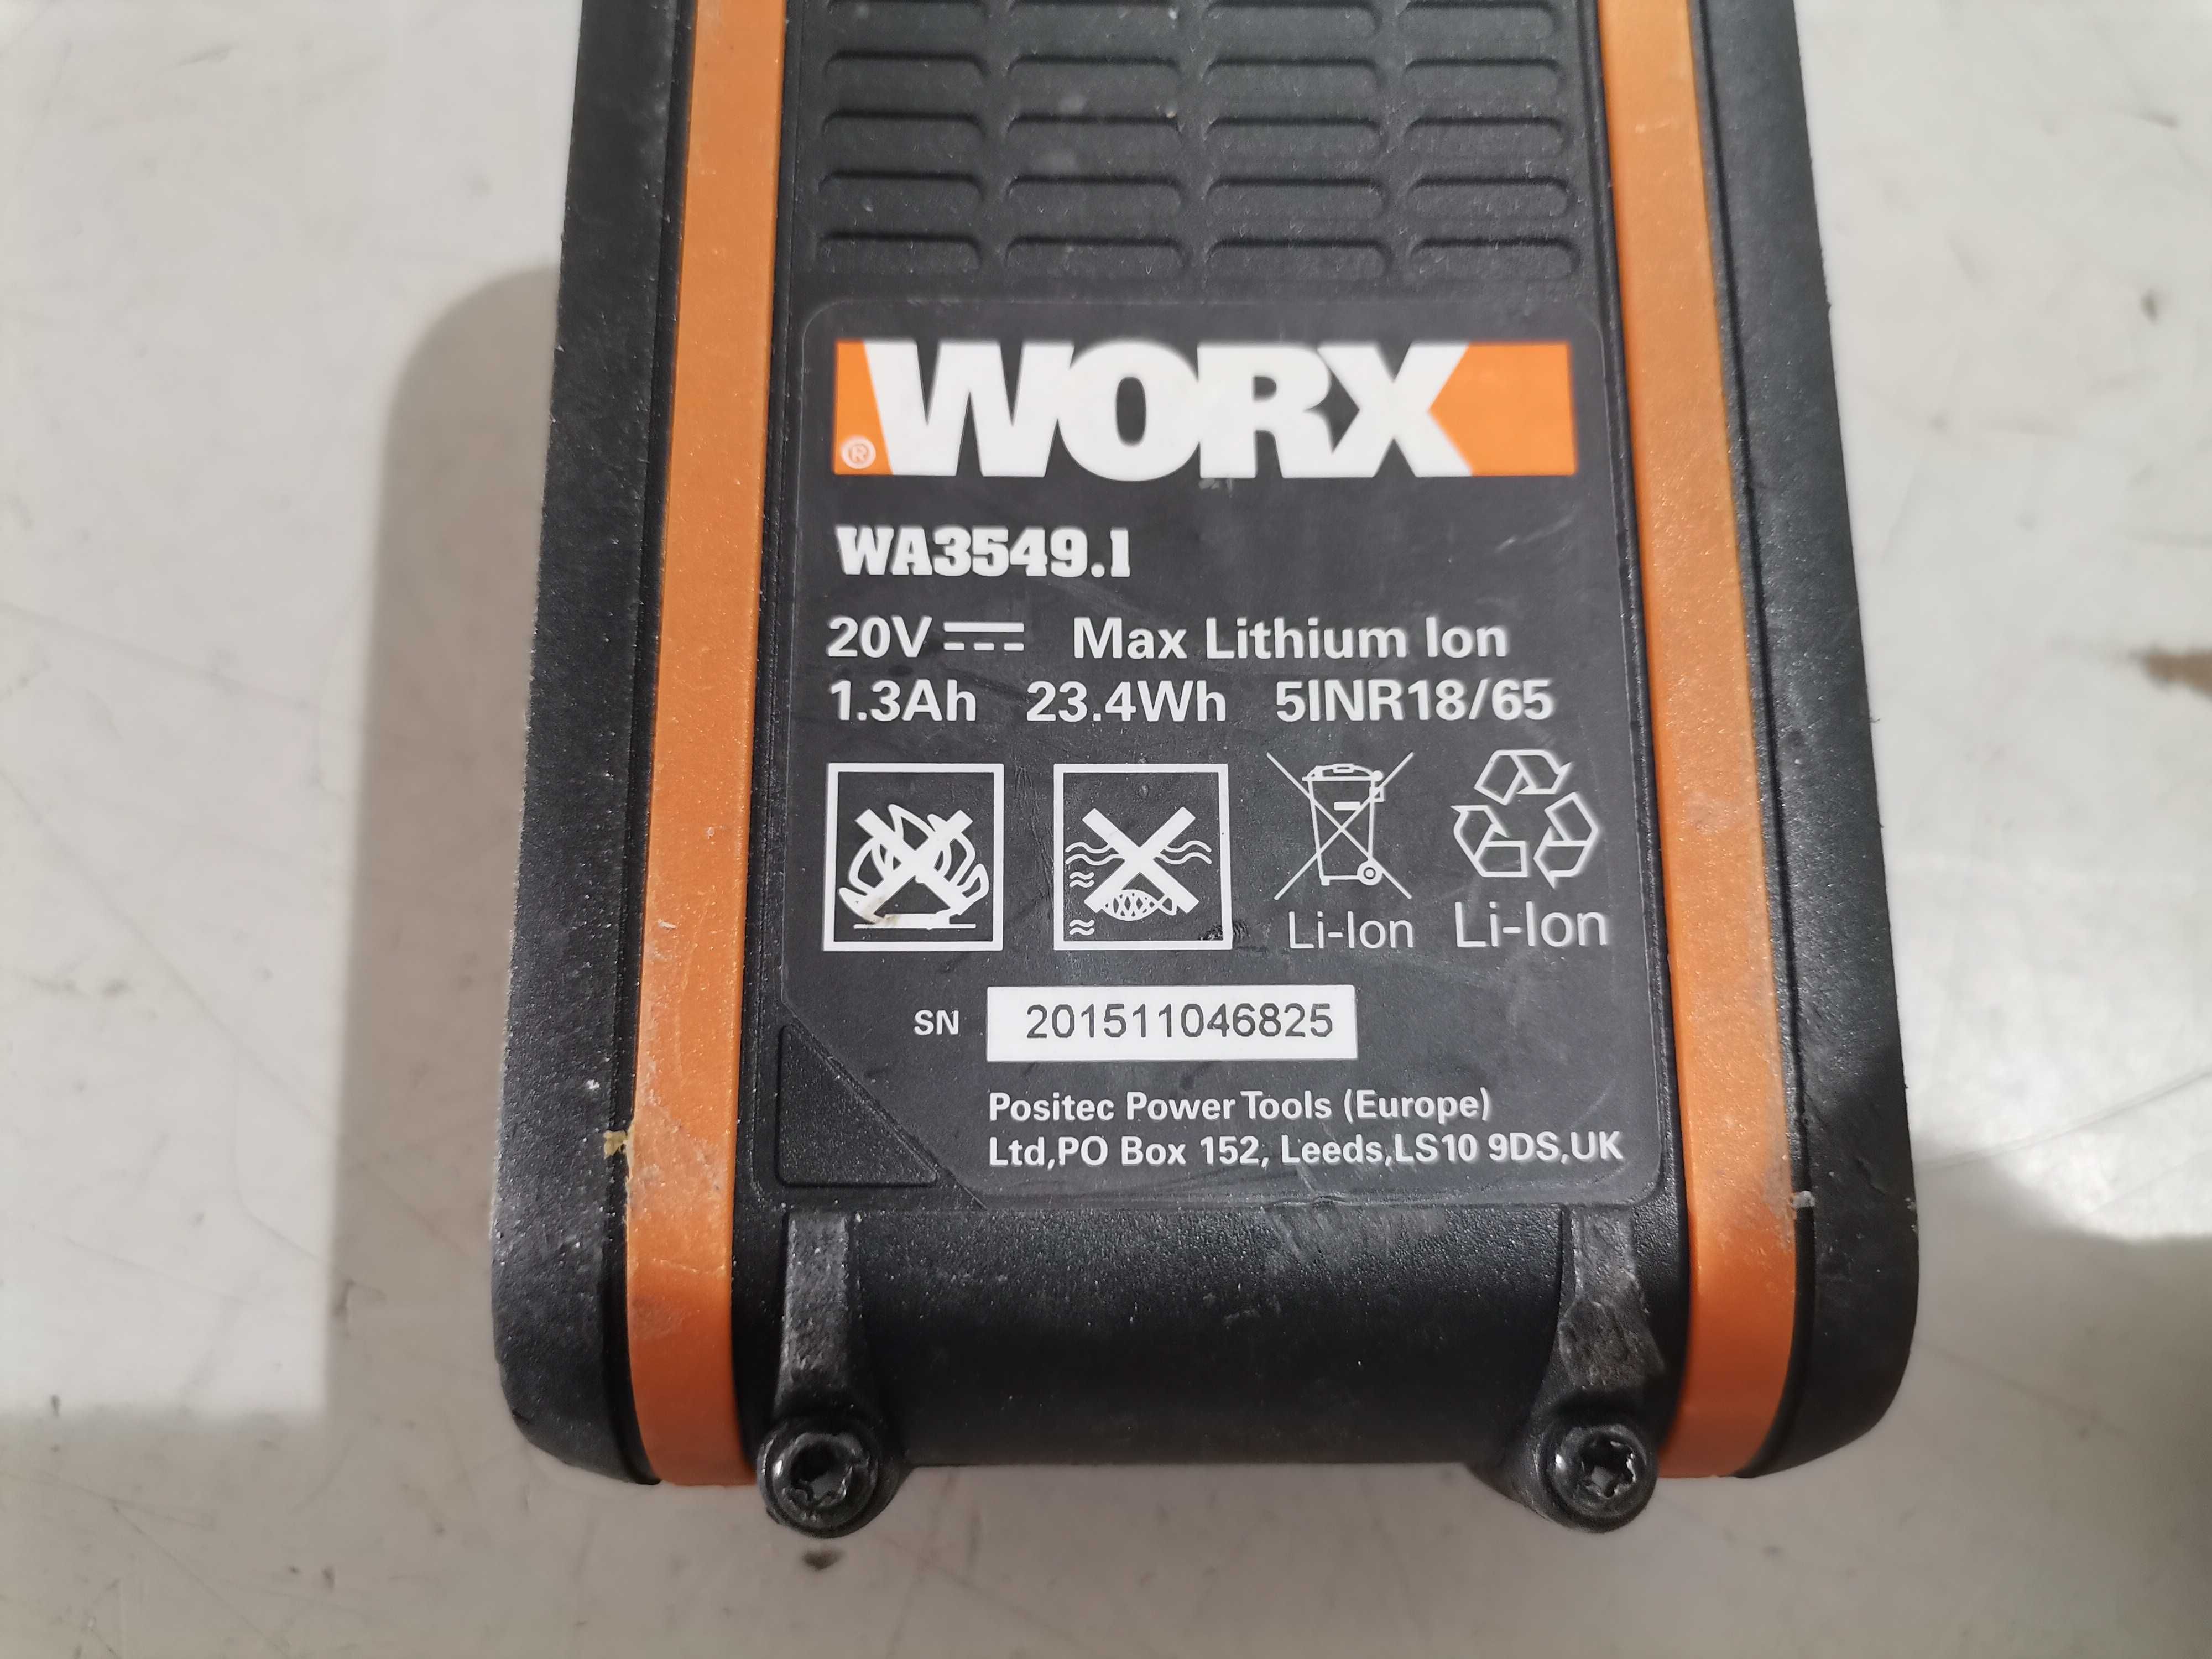 Батерии - Worx 20 V / 1.3Ah / li ion